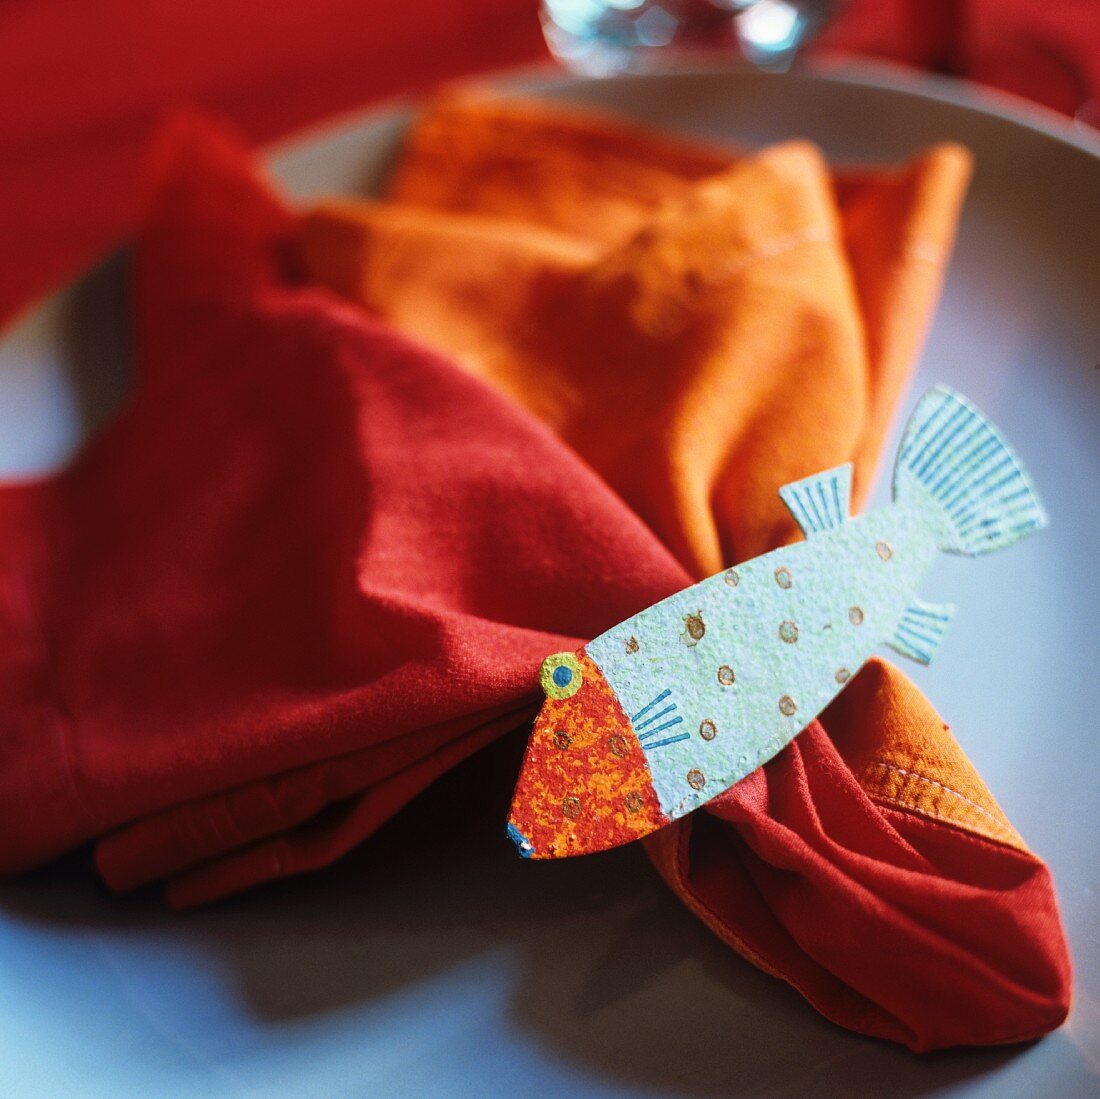 Plate decoration - a fish on an orange napkin